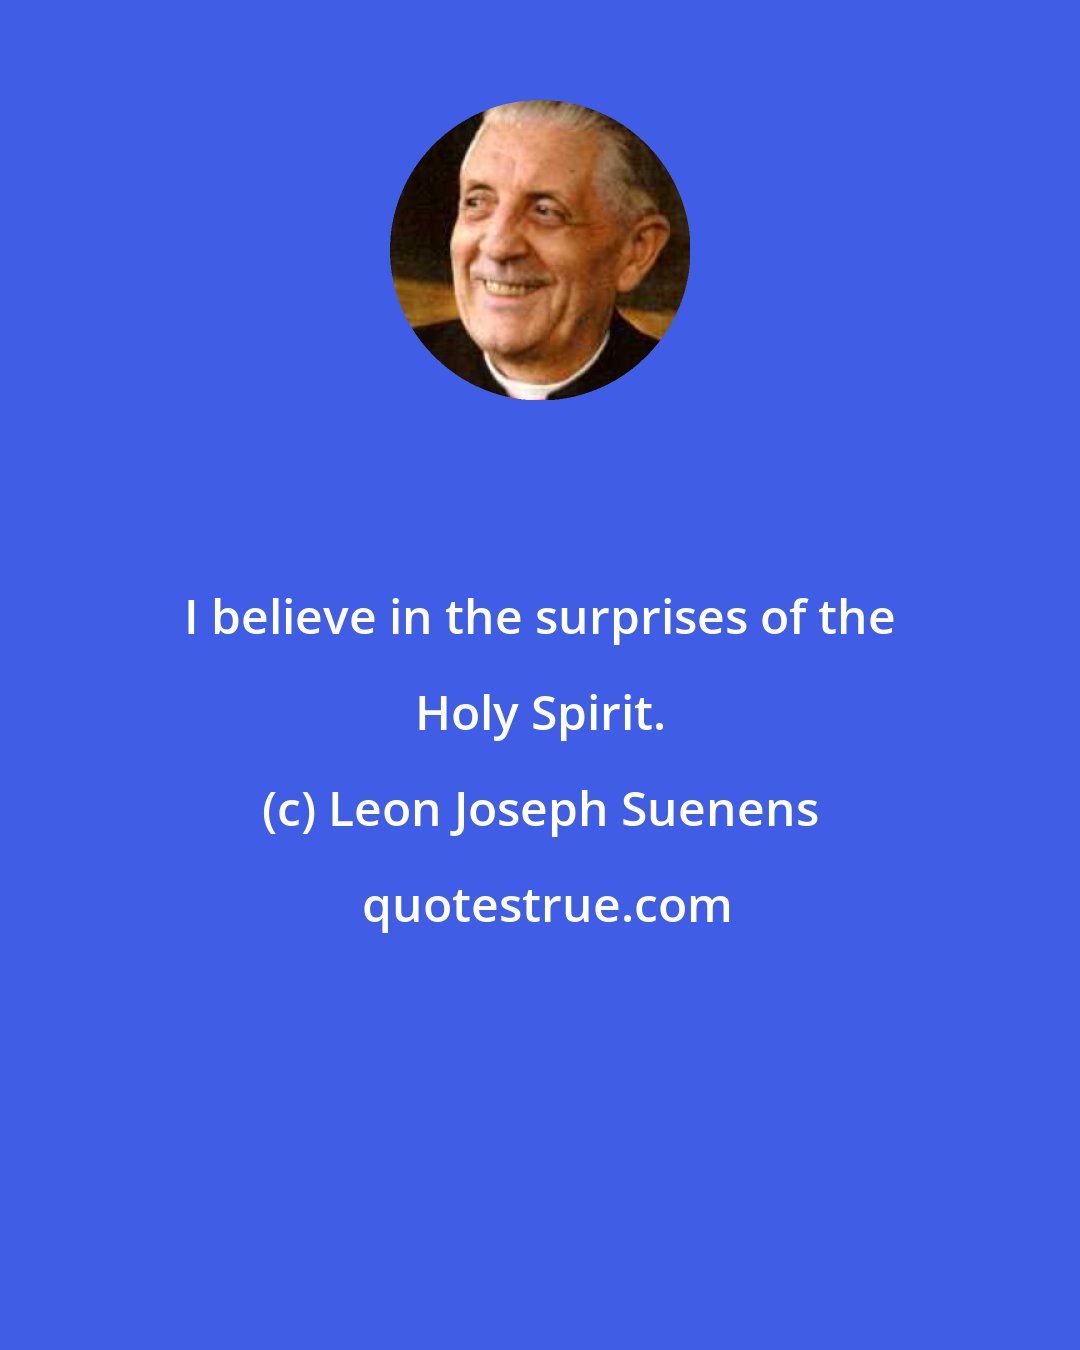 Leon Joseph Suenens: I believe in the surprises of the Holy Spirit.